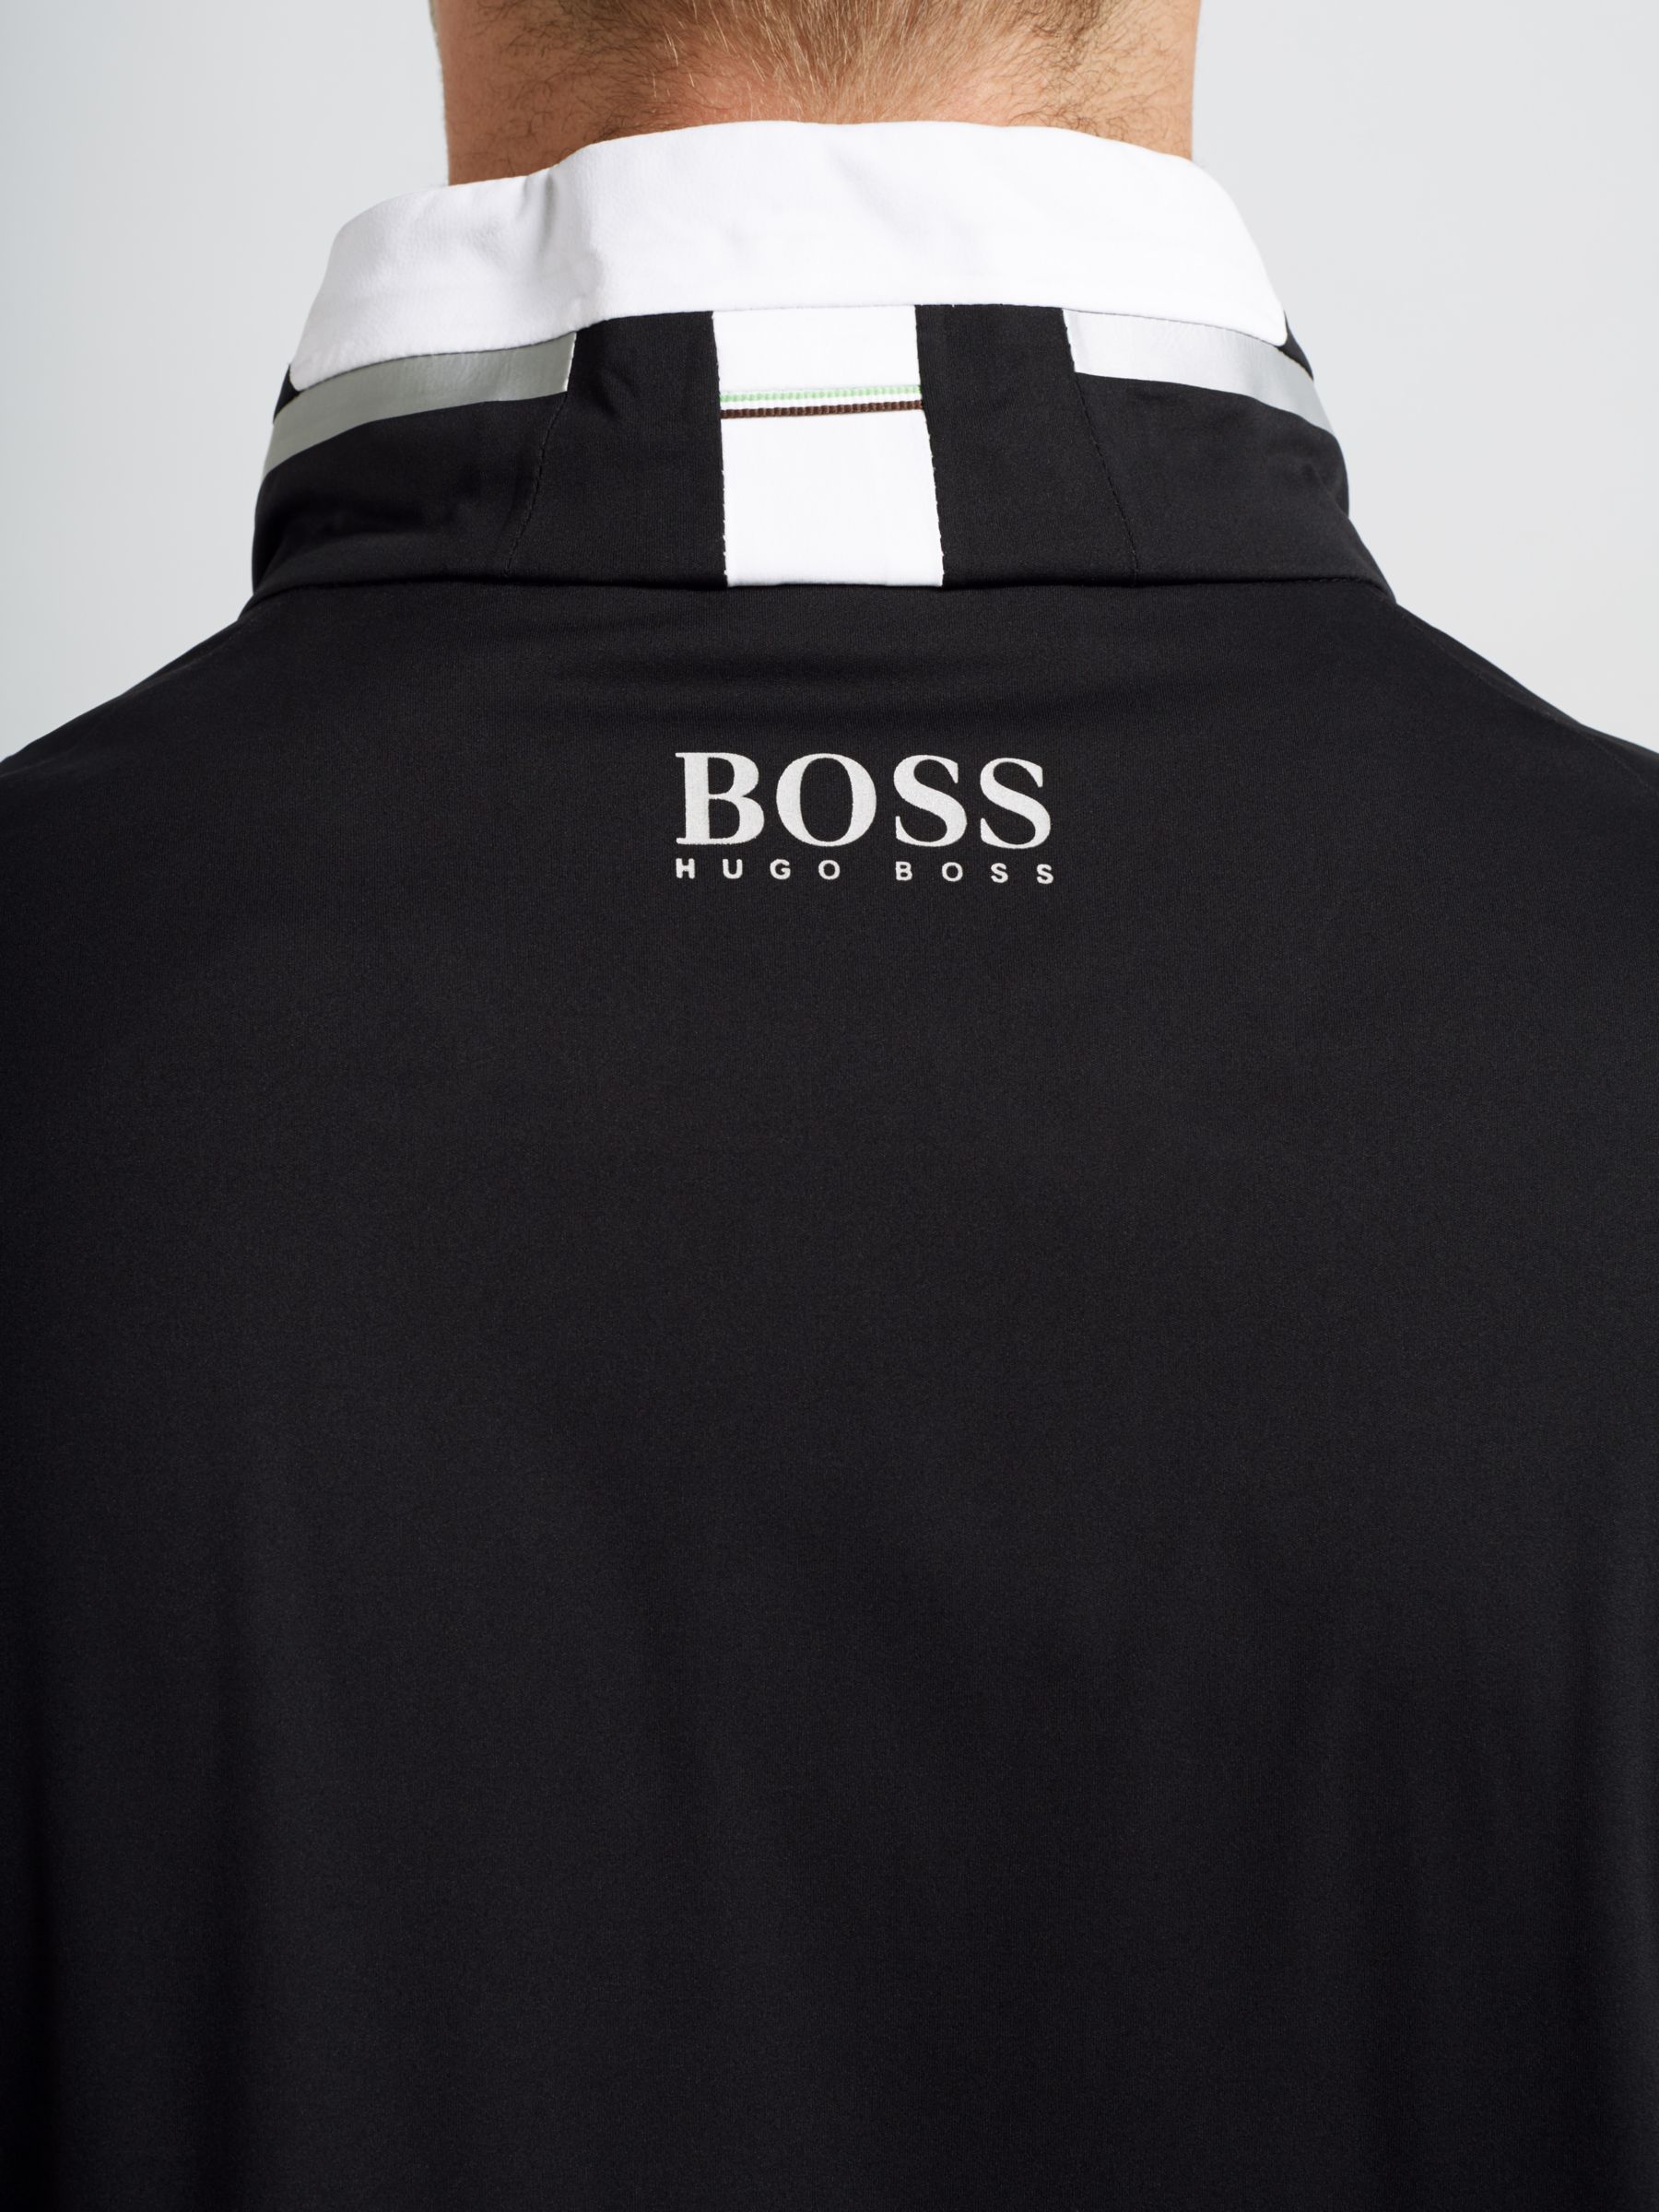 hugo boss golf tops